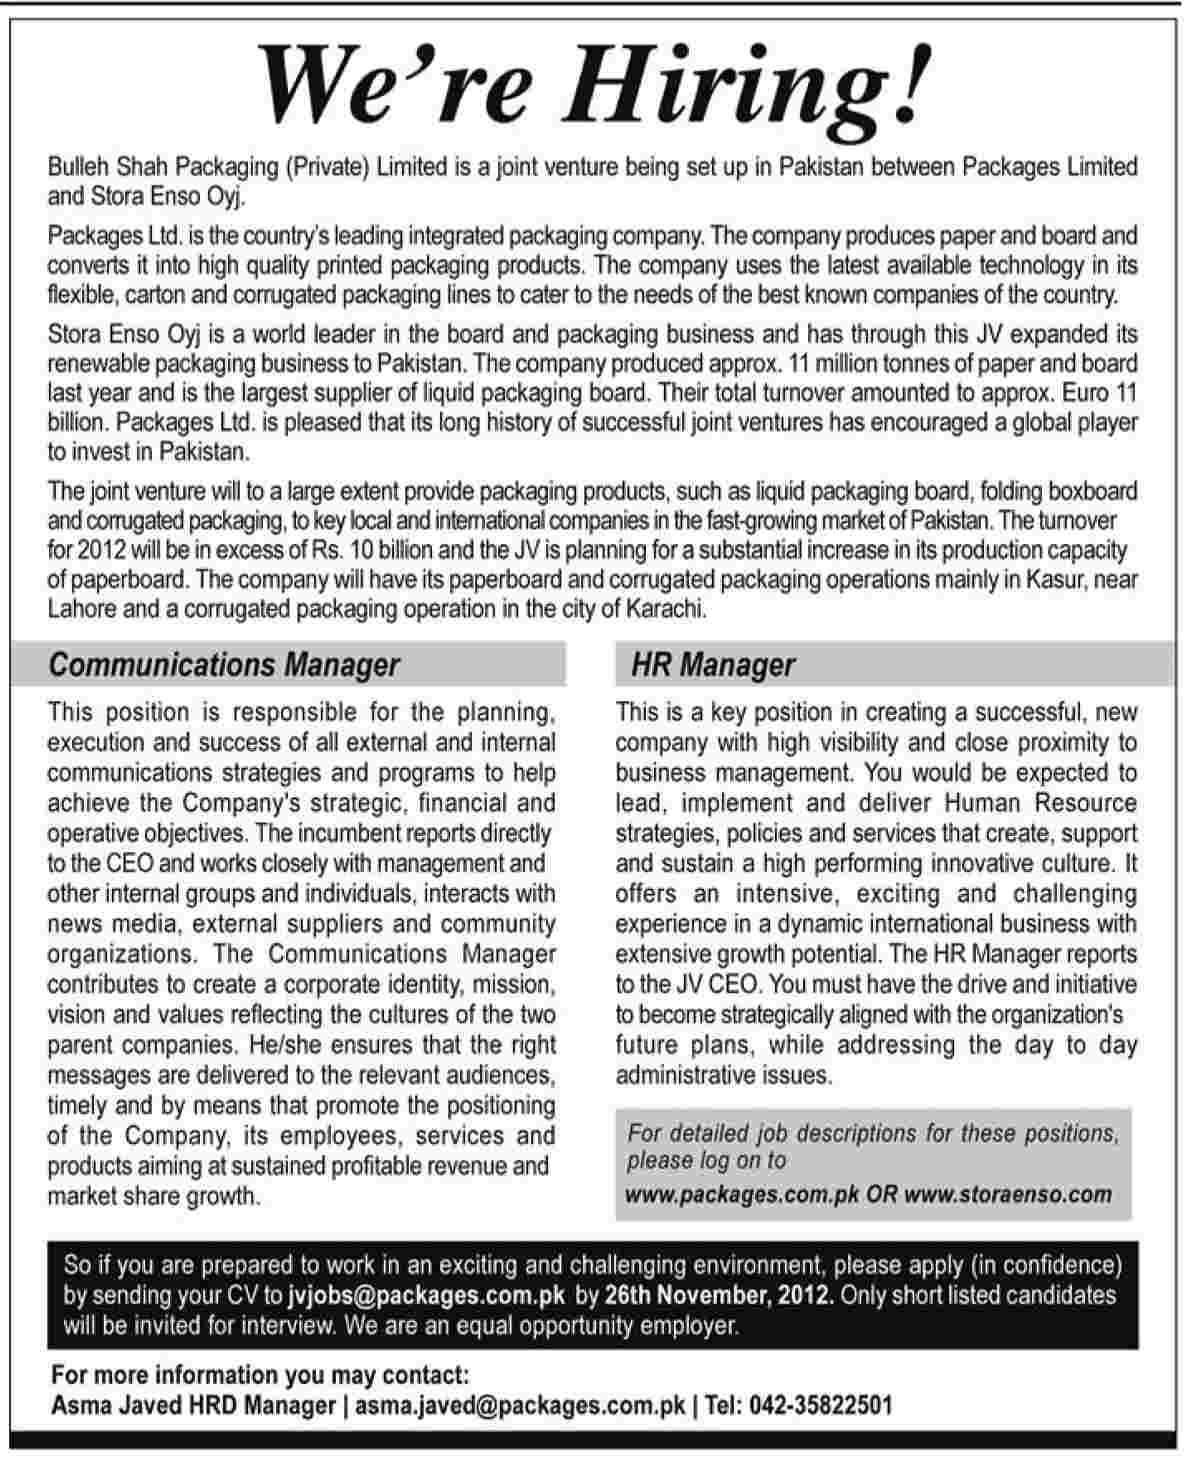 Jobs in Bulleh Shah Packaging (Pvt.) Ltd.